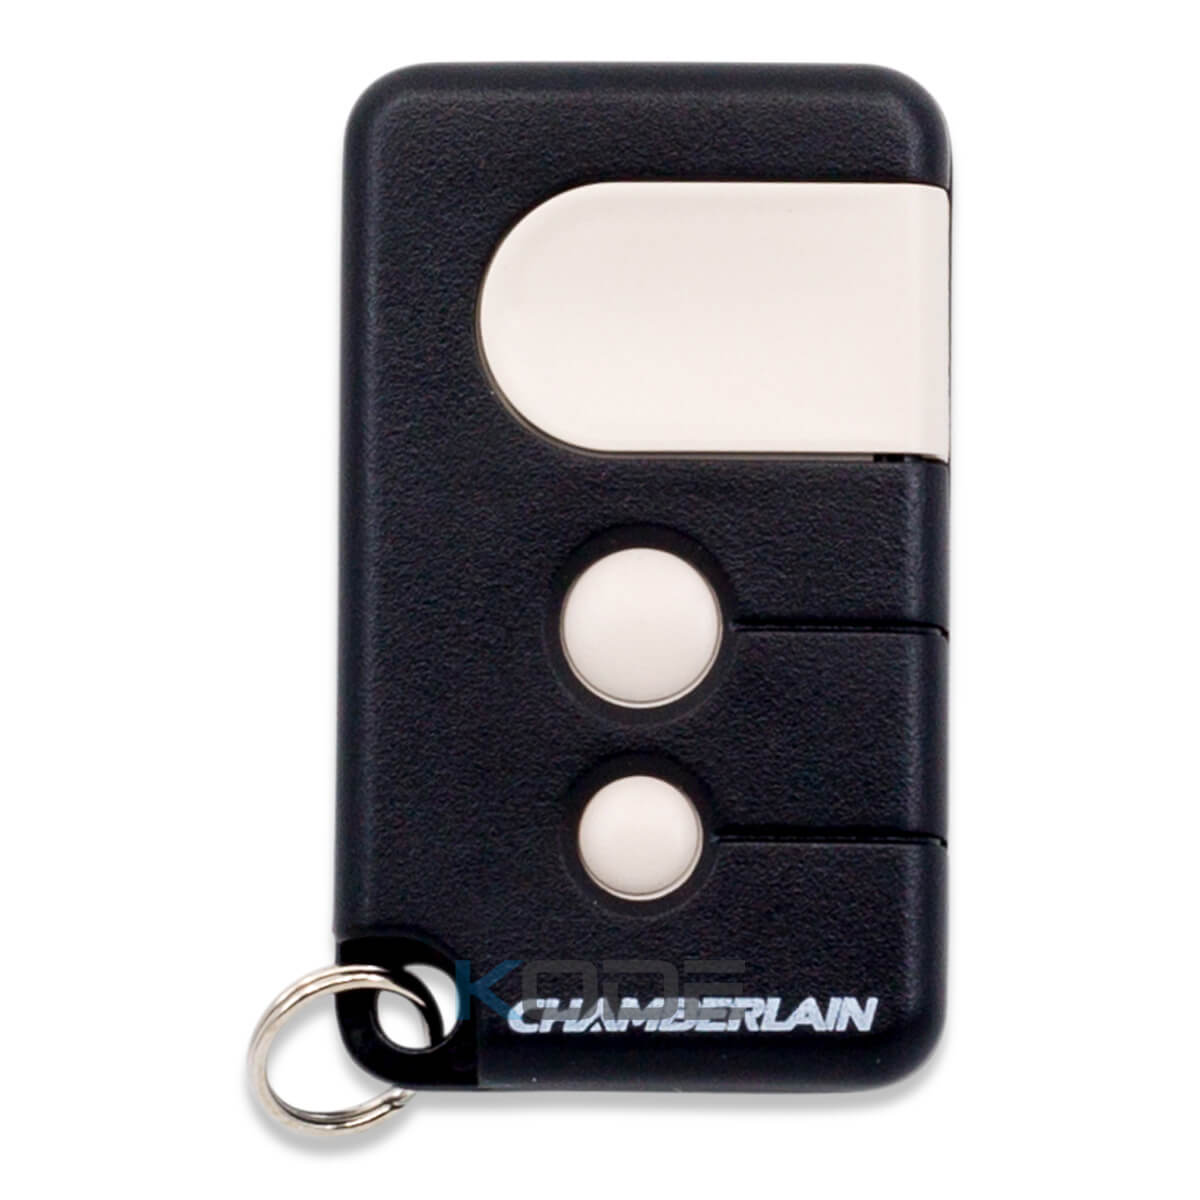 Chamberlain 4335A Garage Door Remote - Front